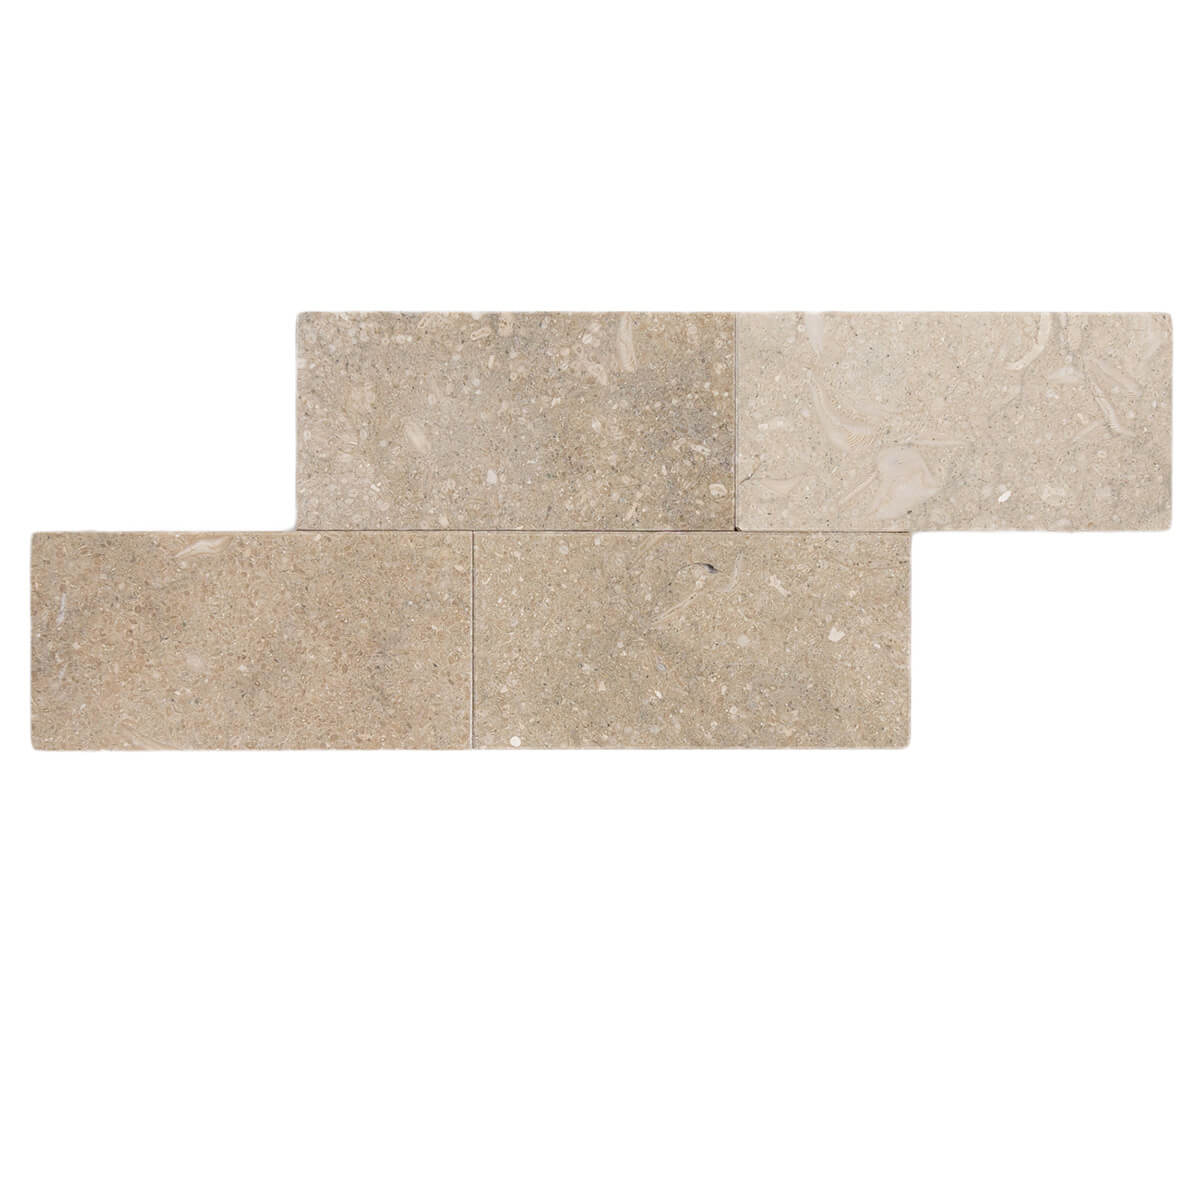 haussmann pistache seagrass limestone rectangle natural stone field tile 3x6 honed